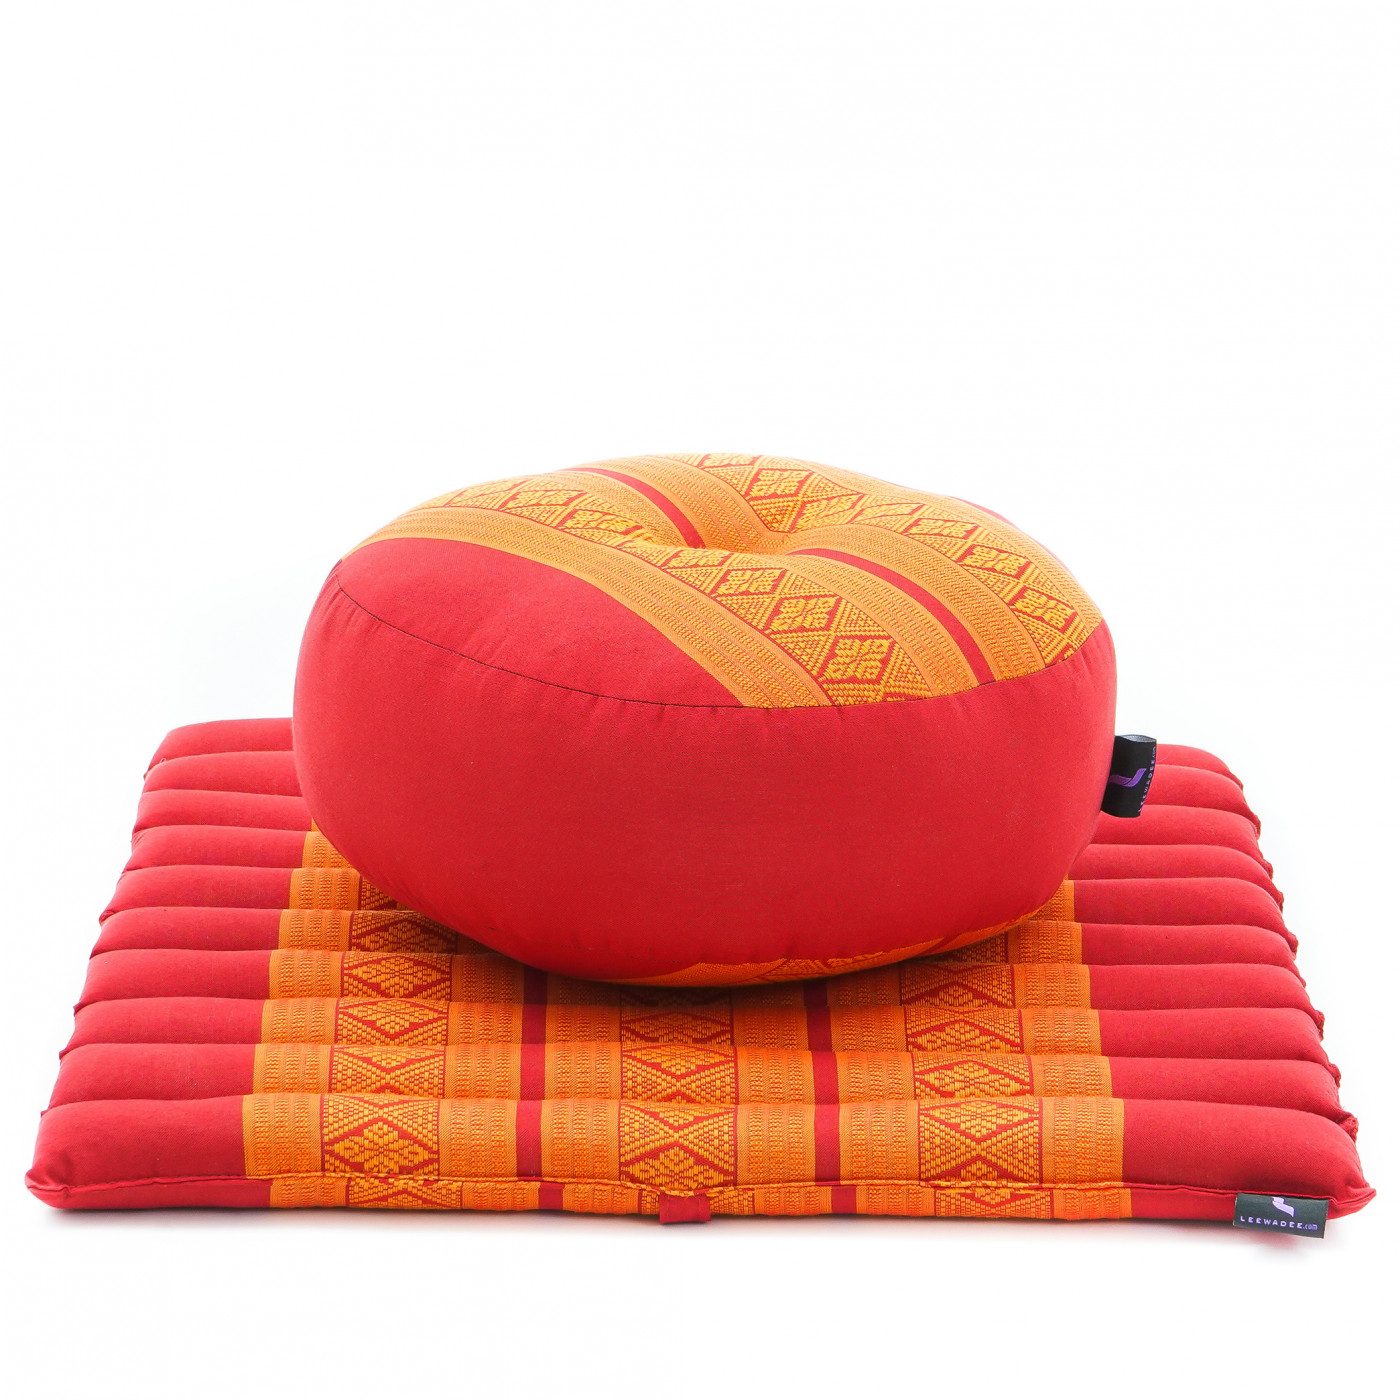 01 Small Yoga Cushion Red/Orange 